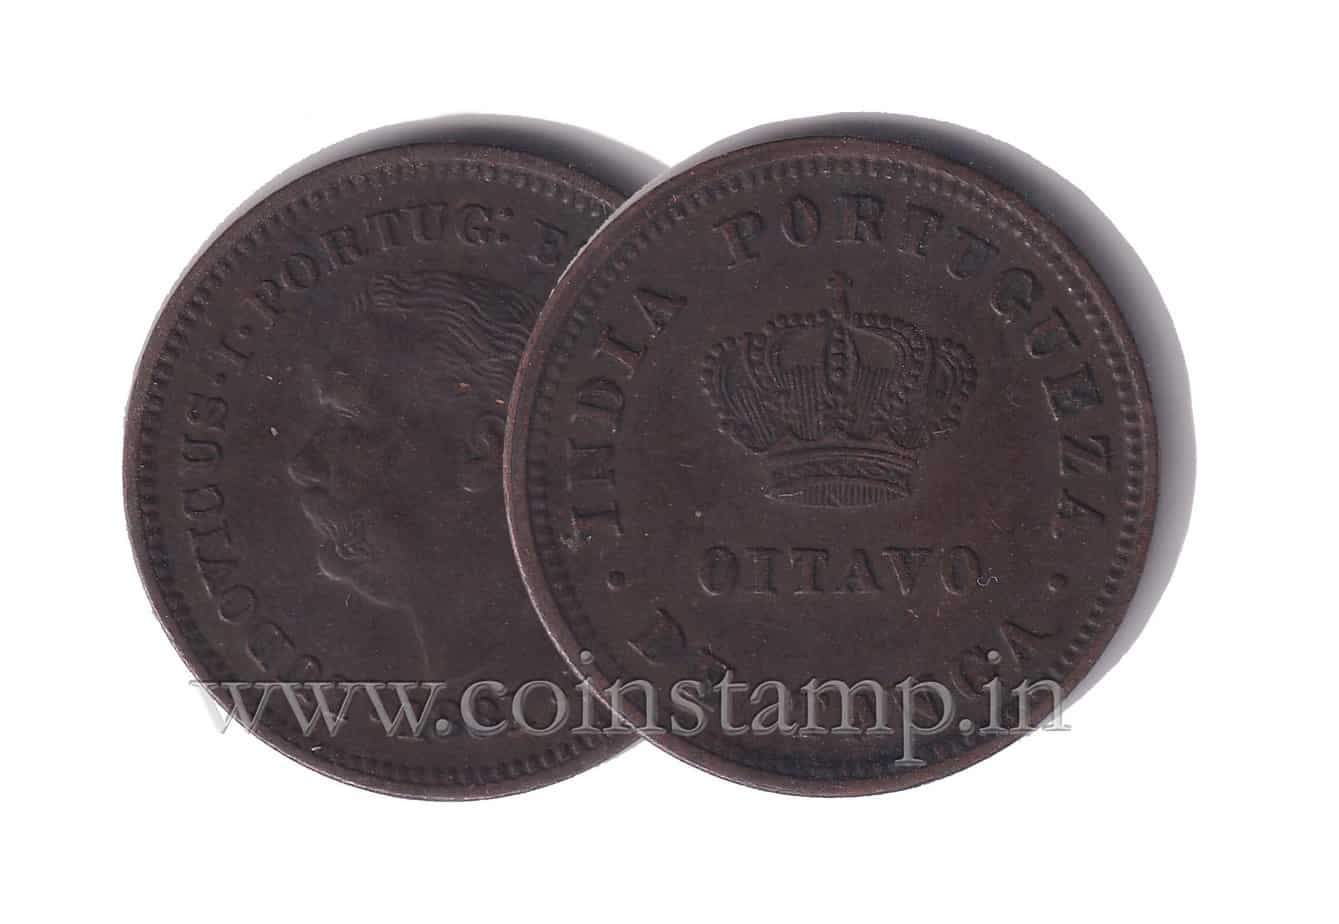 Portuguese India Coins